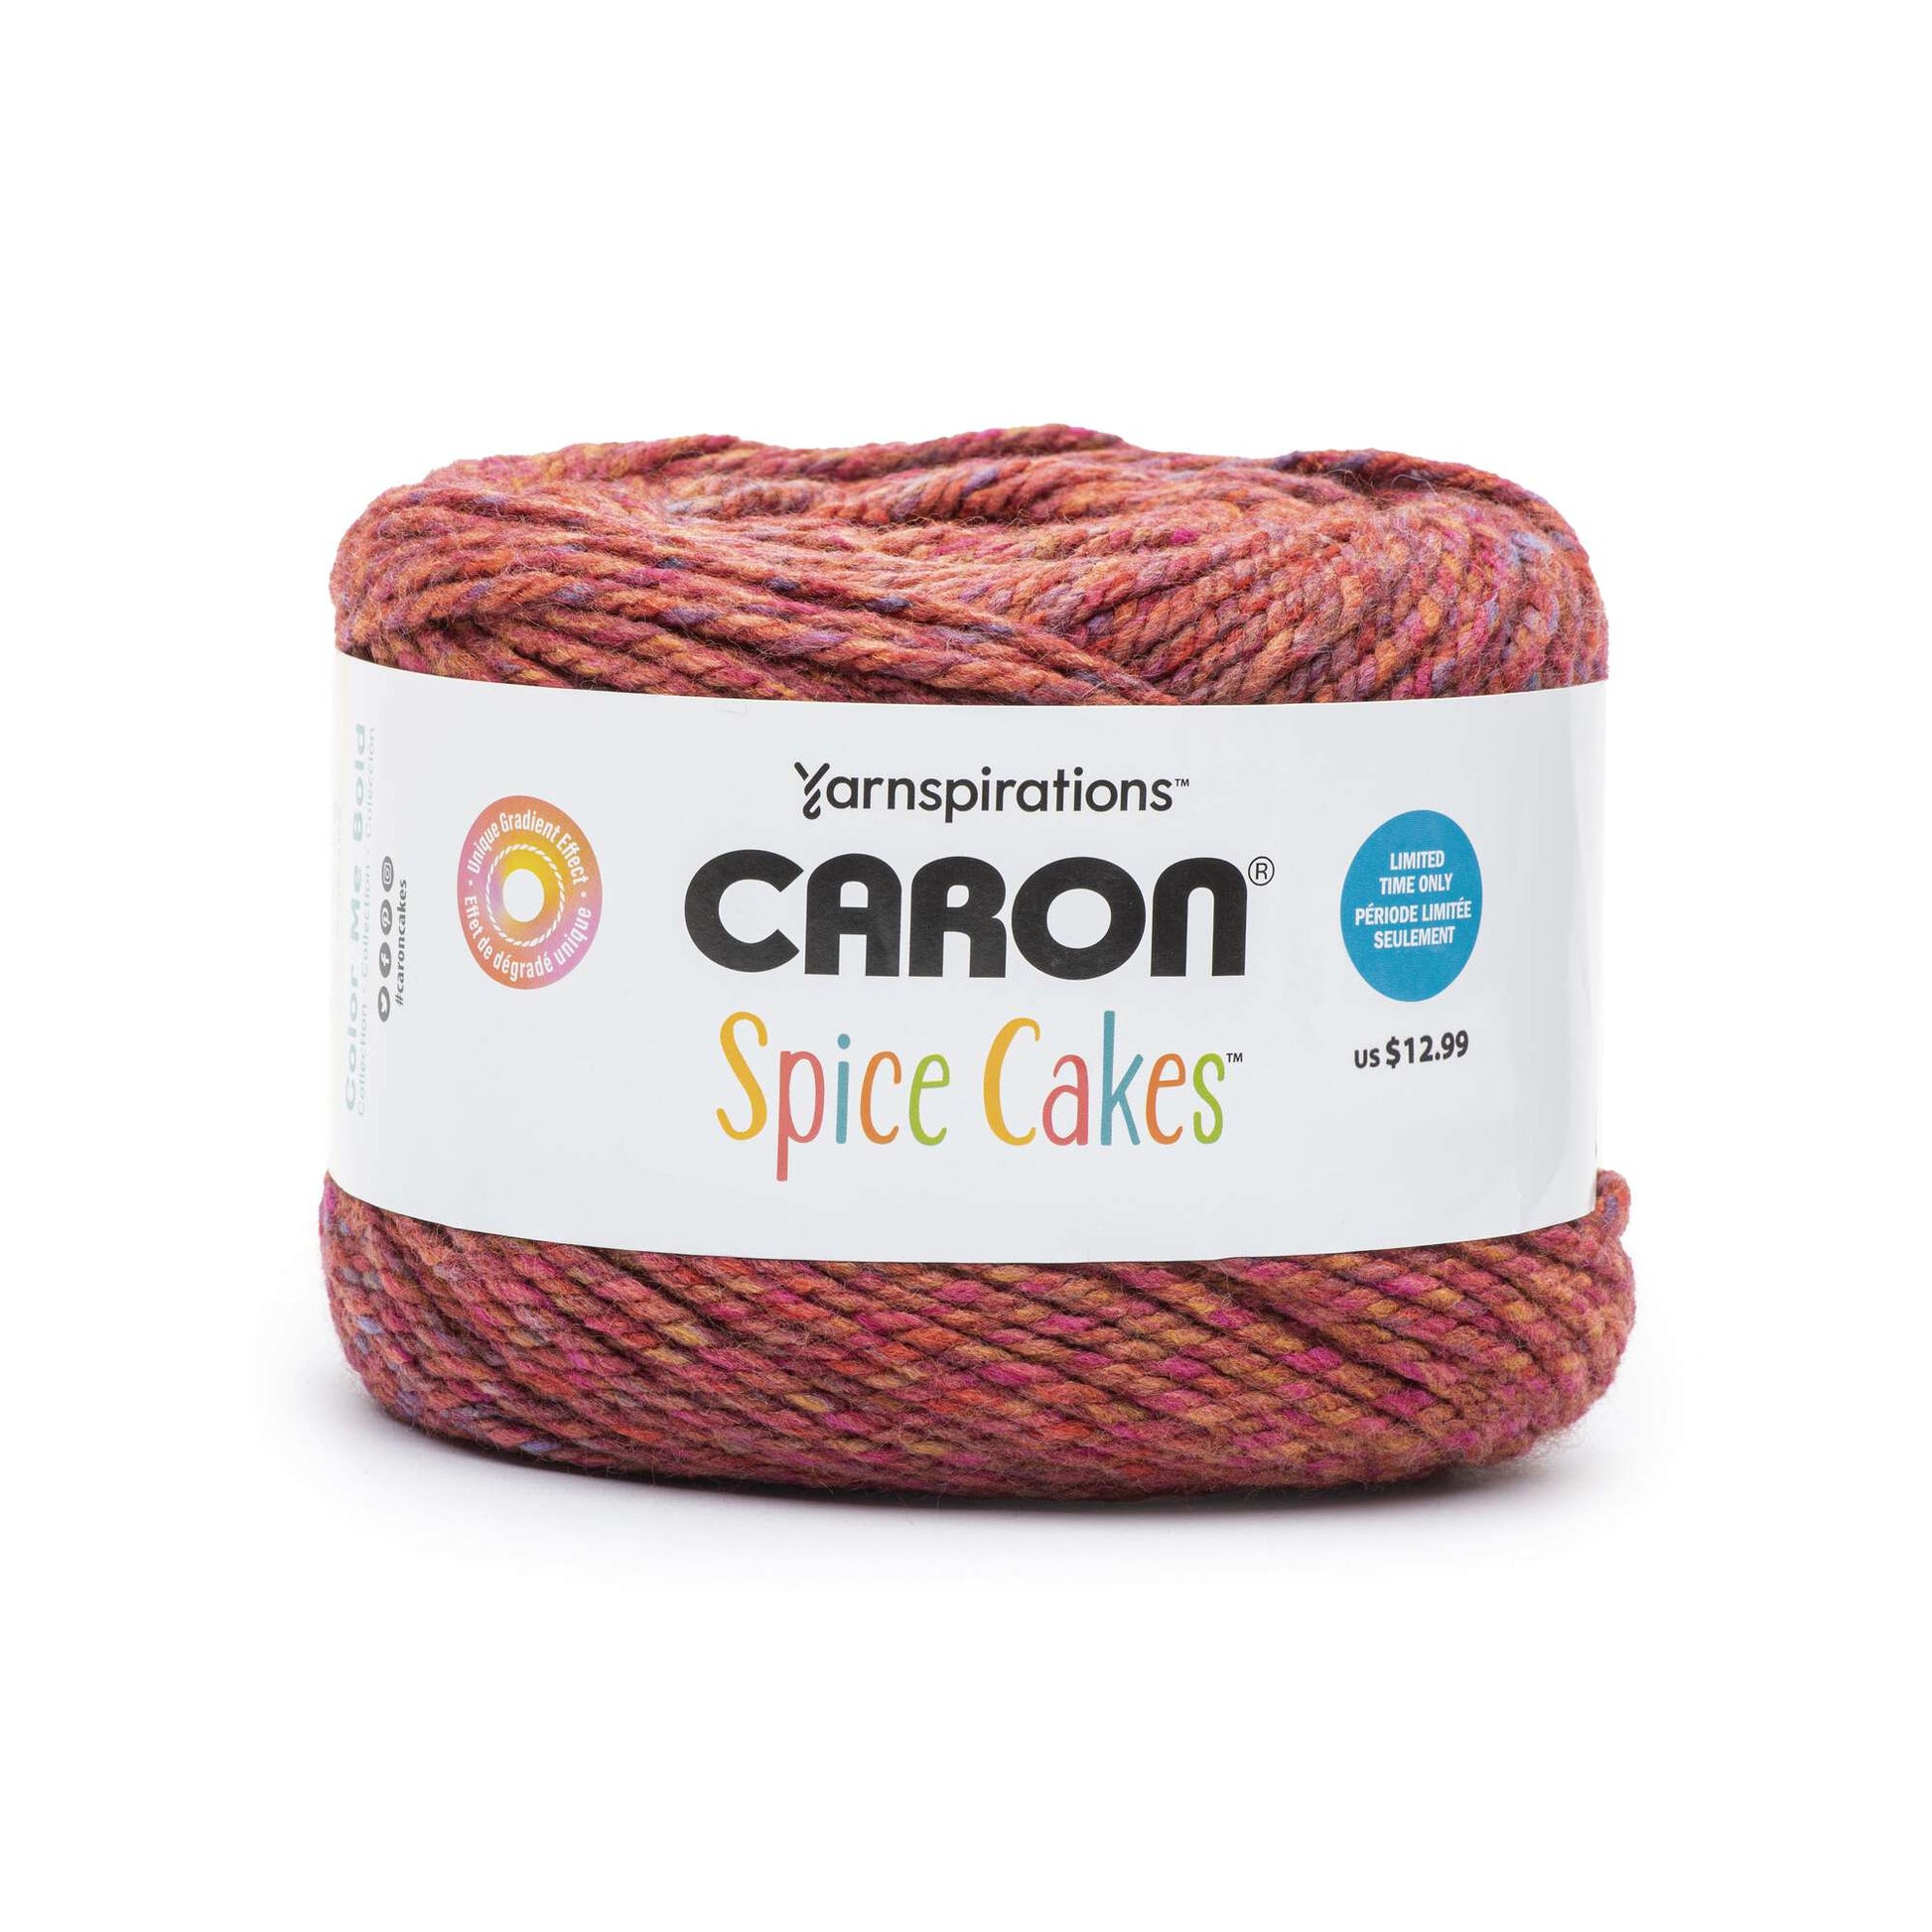 Caron Spice Cakes Yarn - Retailer Exclusive